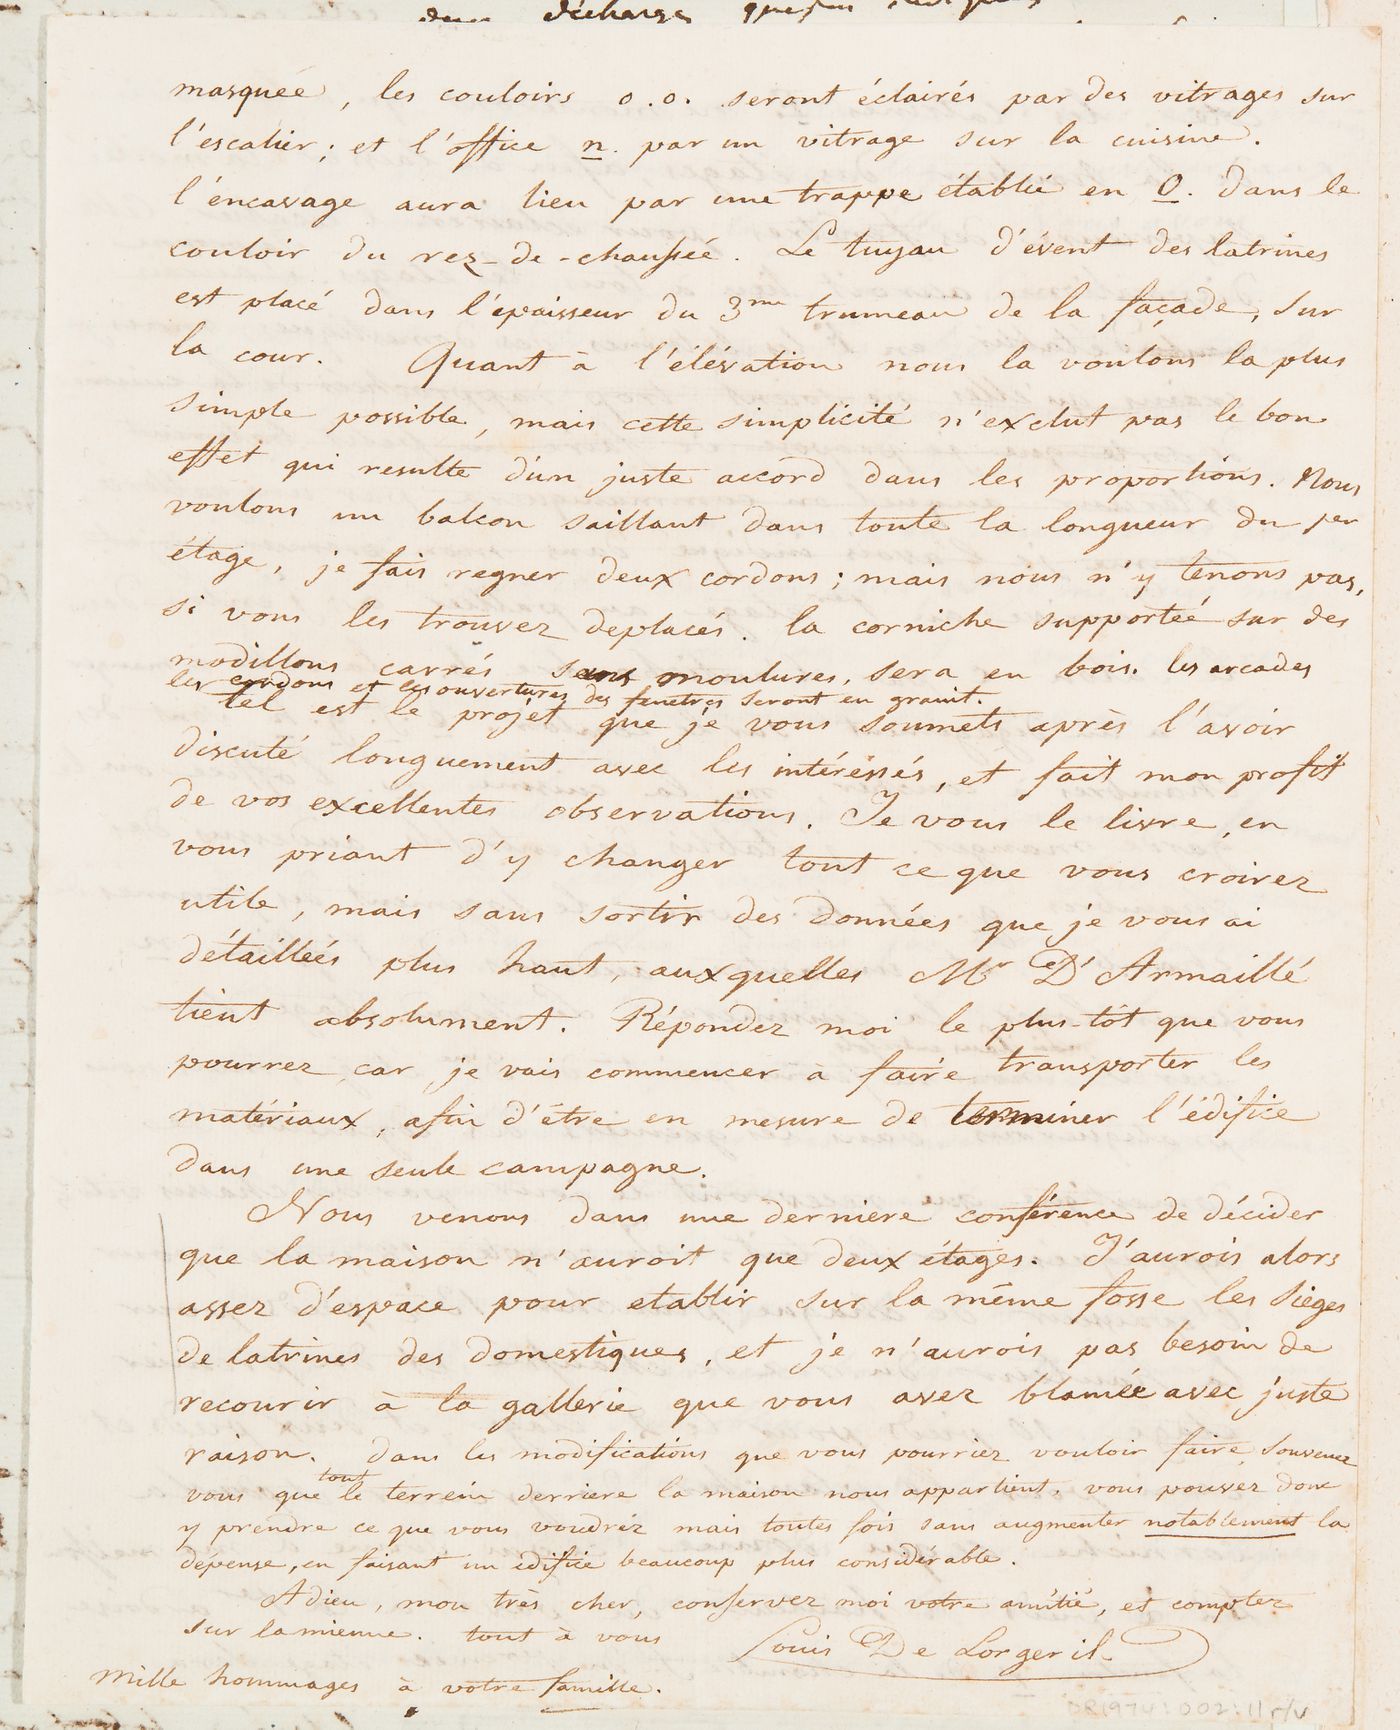 Letter from M. de Lorgeril to Hubert Rohault de Fleury concerning an apartment house for the M. de Lorgeril family in Rennes, 8 June 1821